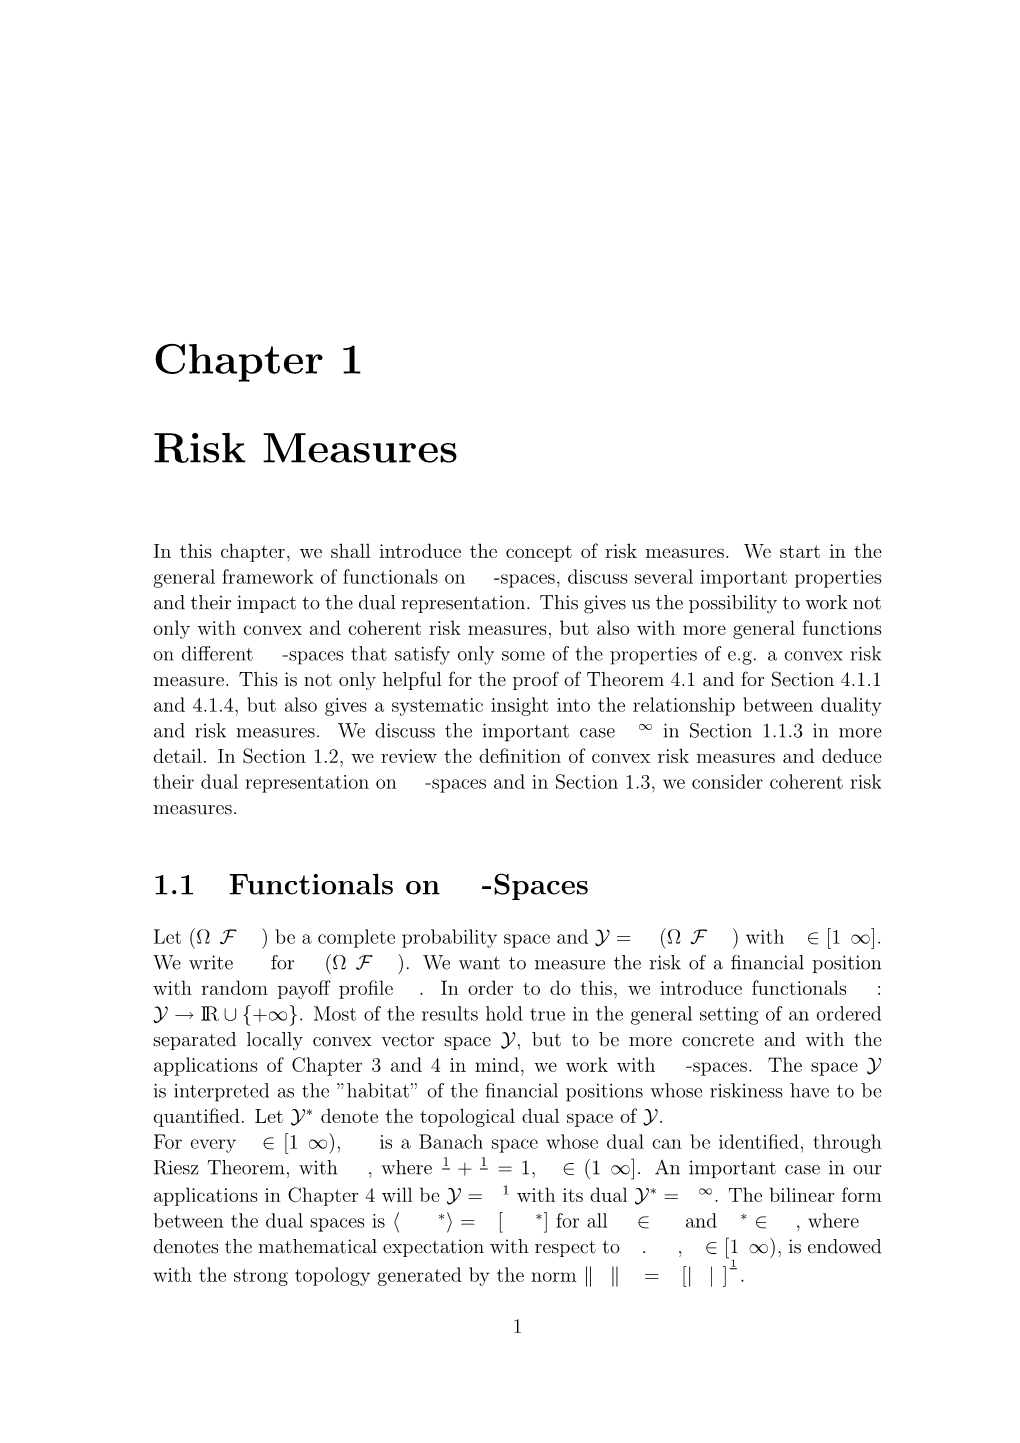 Chapter 1 Risk Measures